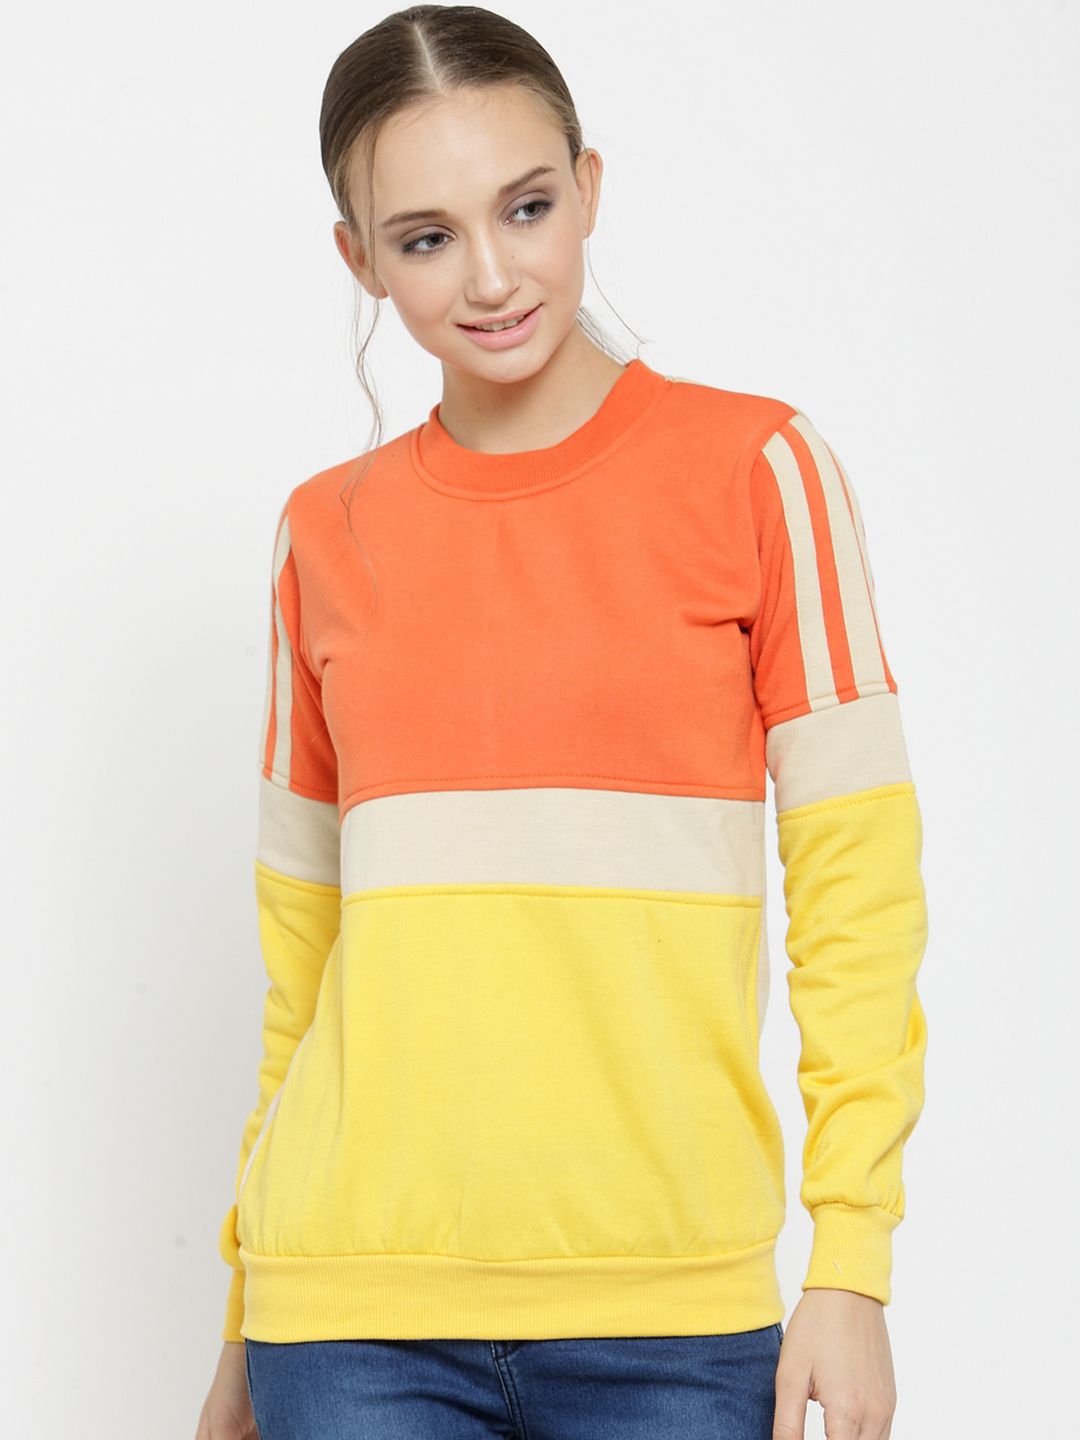 Belle Fille Women Orange & Yellow Colourblocked Sweatshirt Price in India